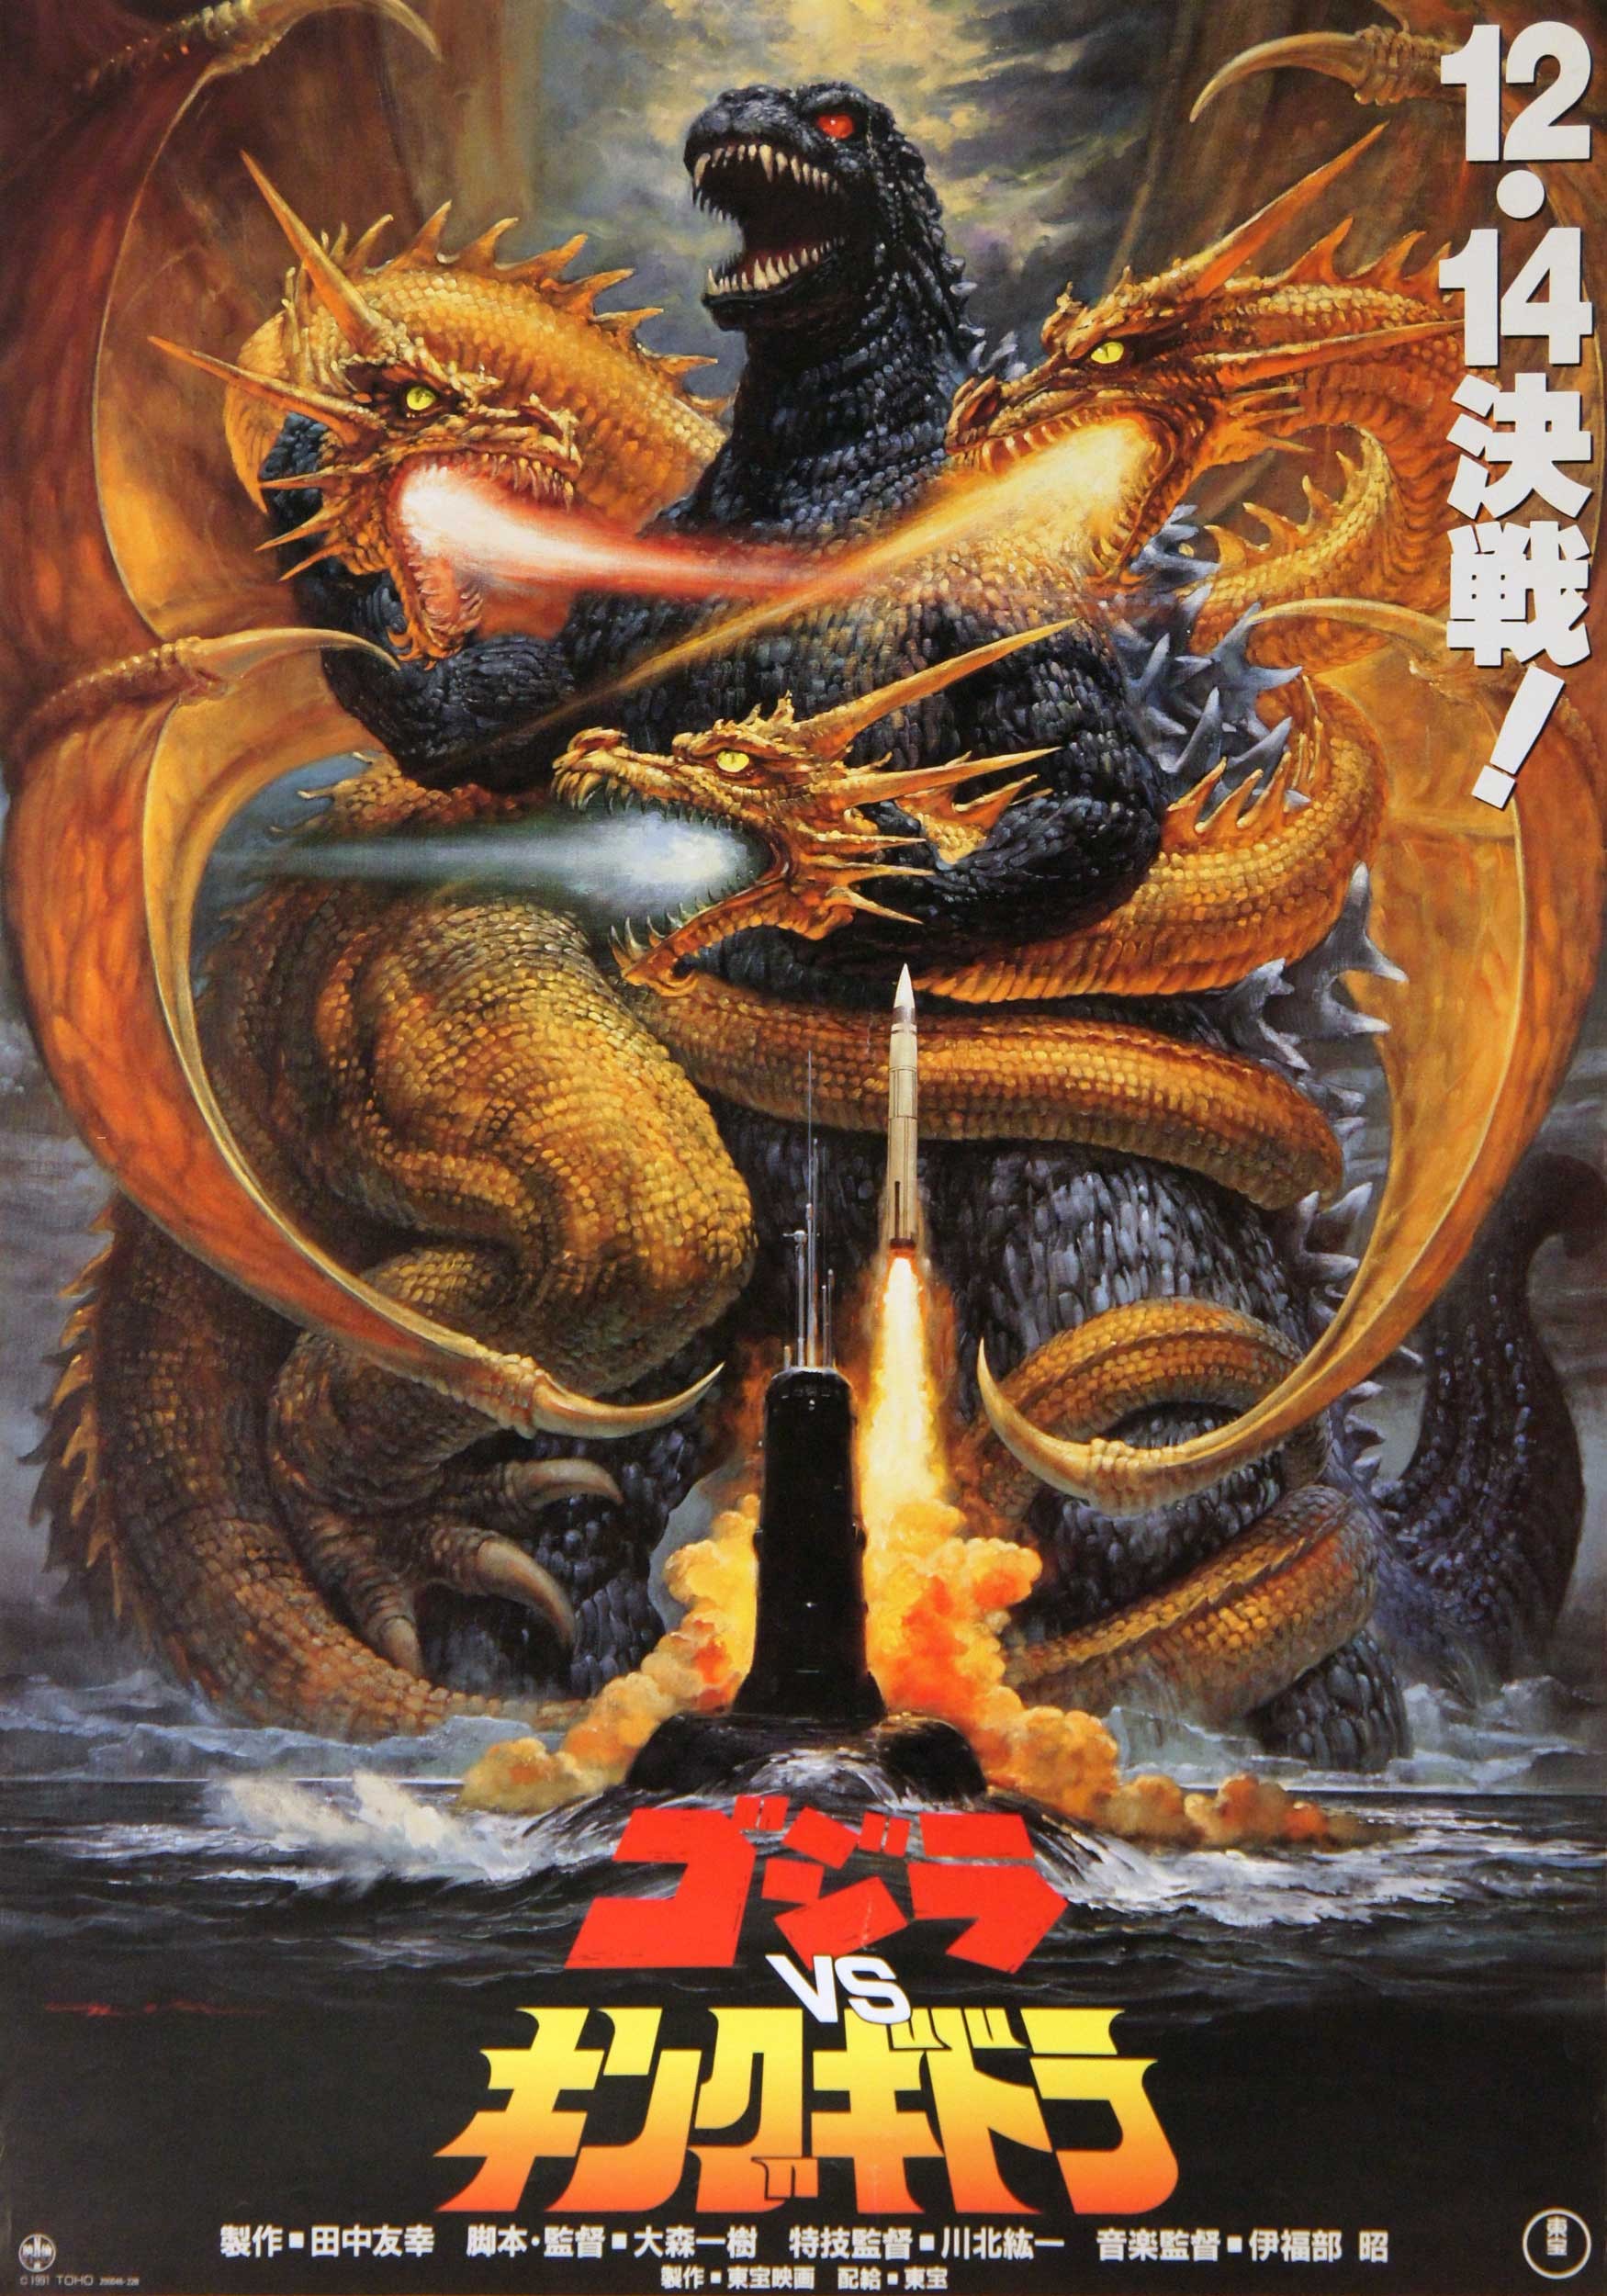 Wallpaper, movie poster, dragon, vintage, comics, mythology, Godzilla, comic book, 1750x2500 px 1750x2500